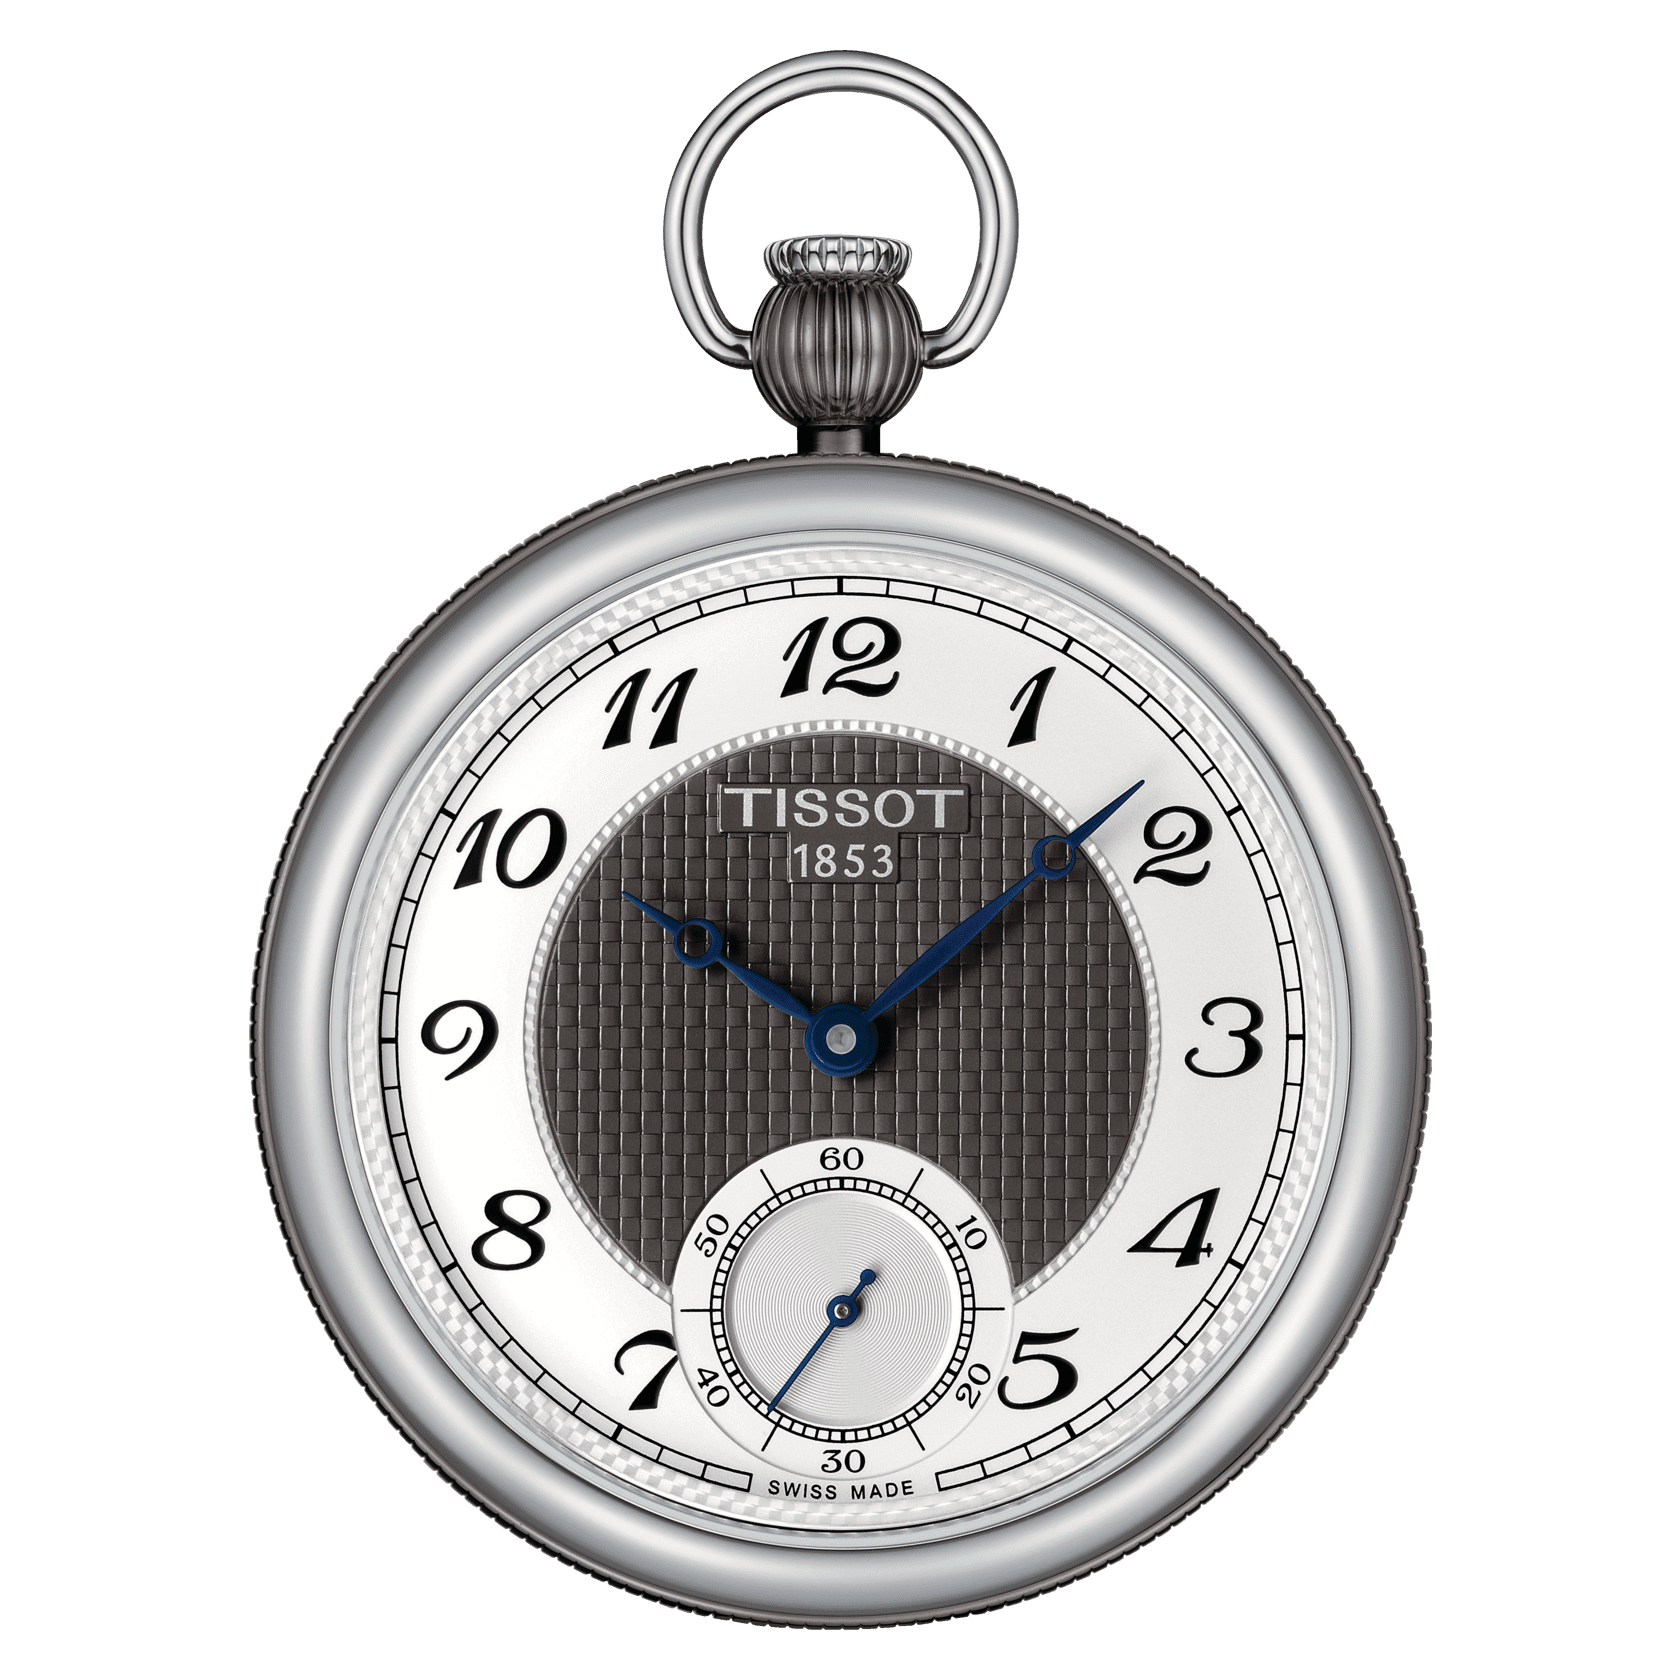 Piaget Replicas Watch